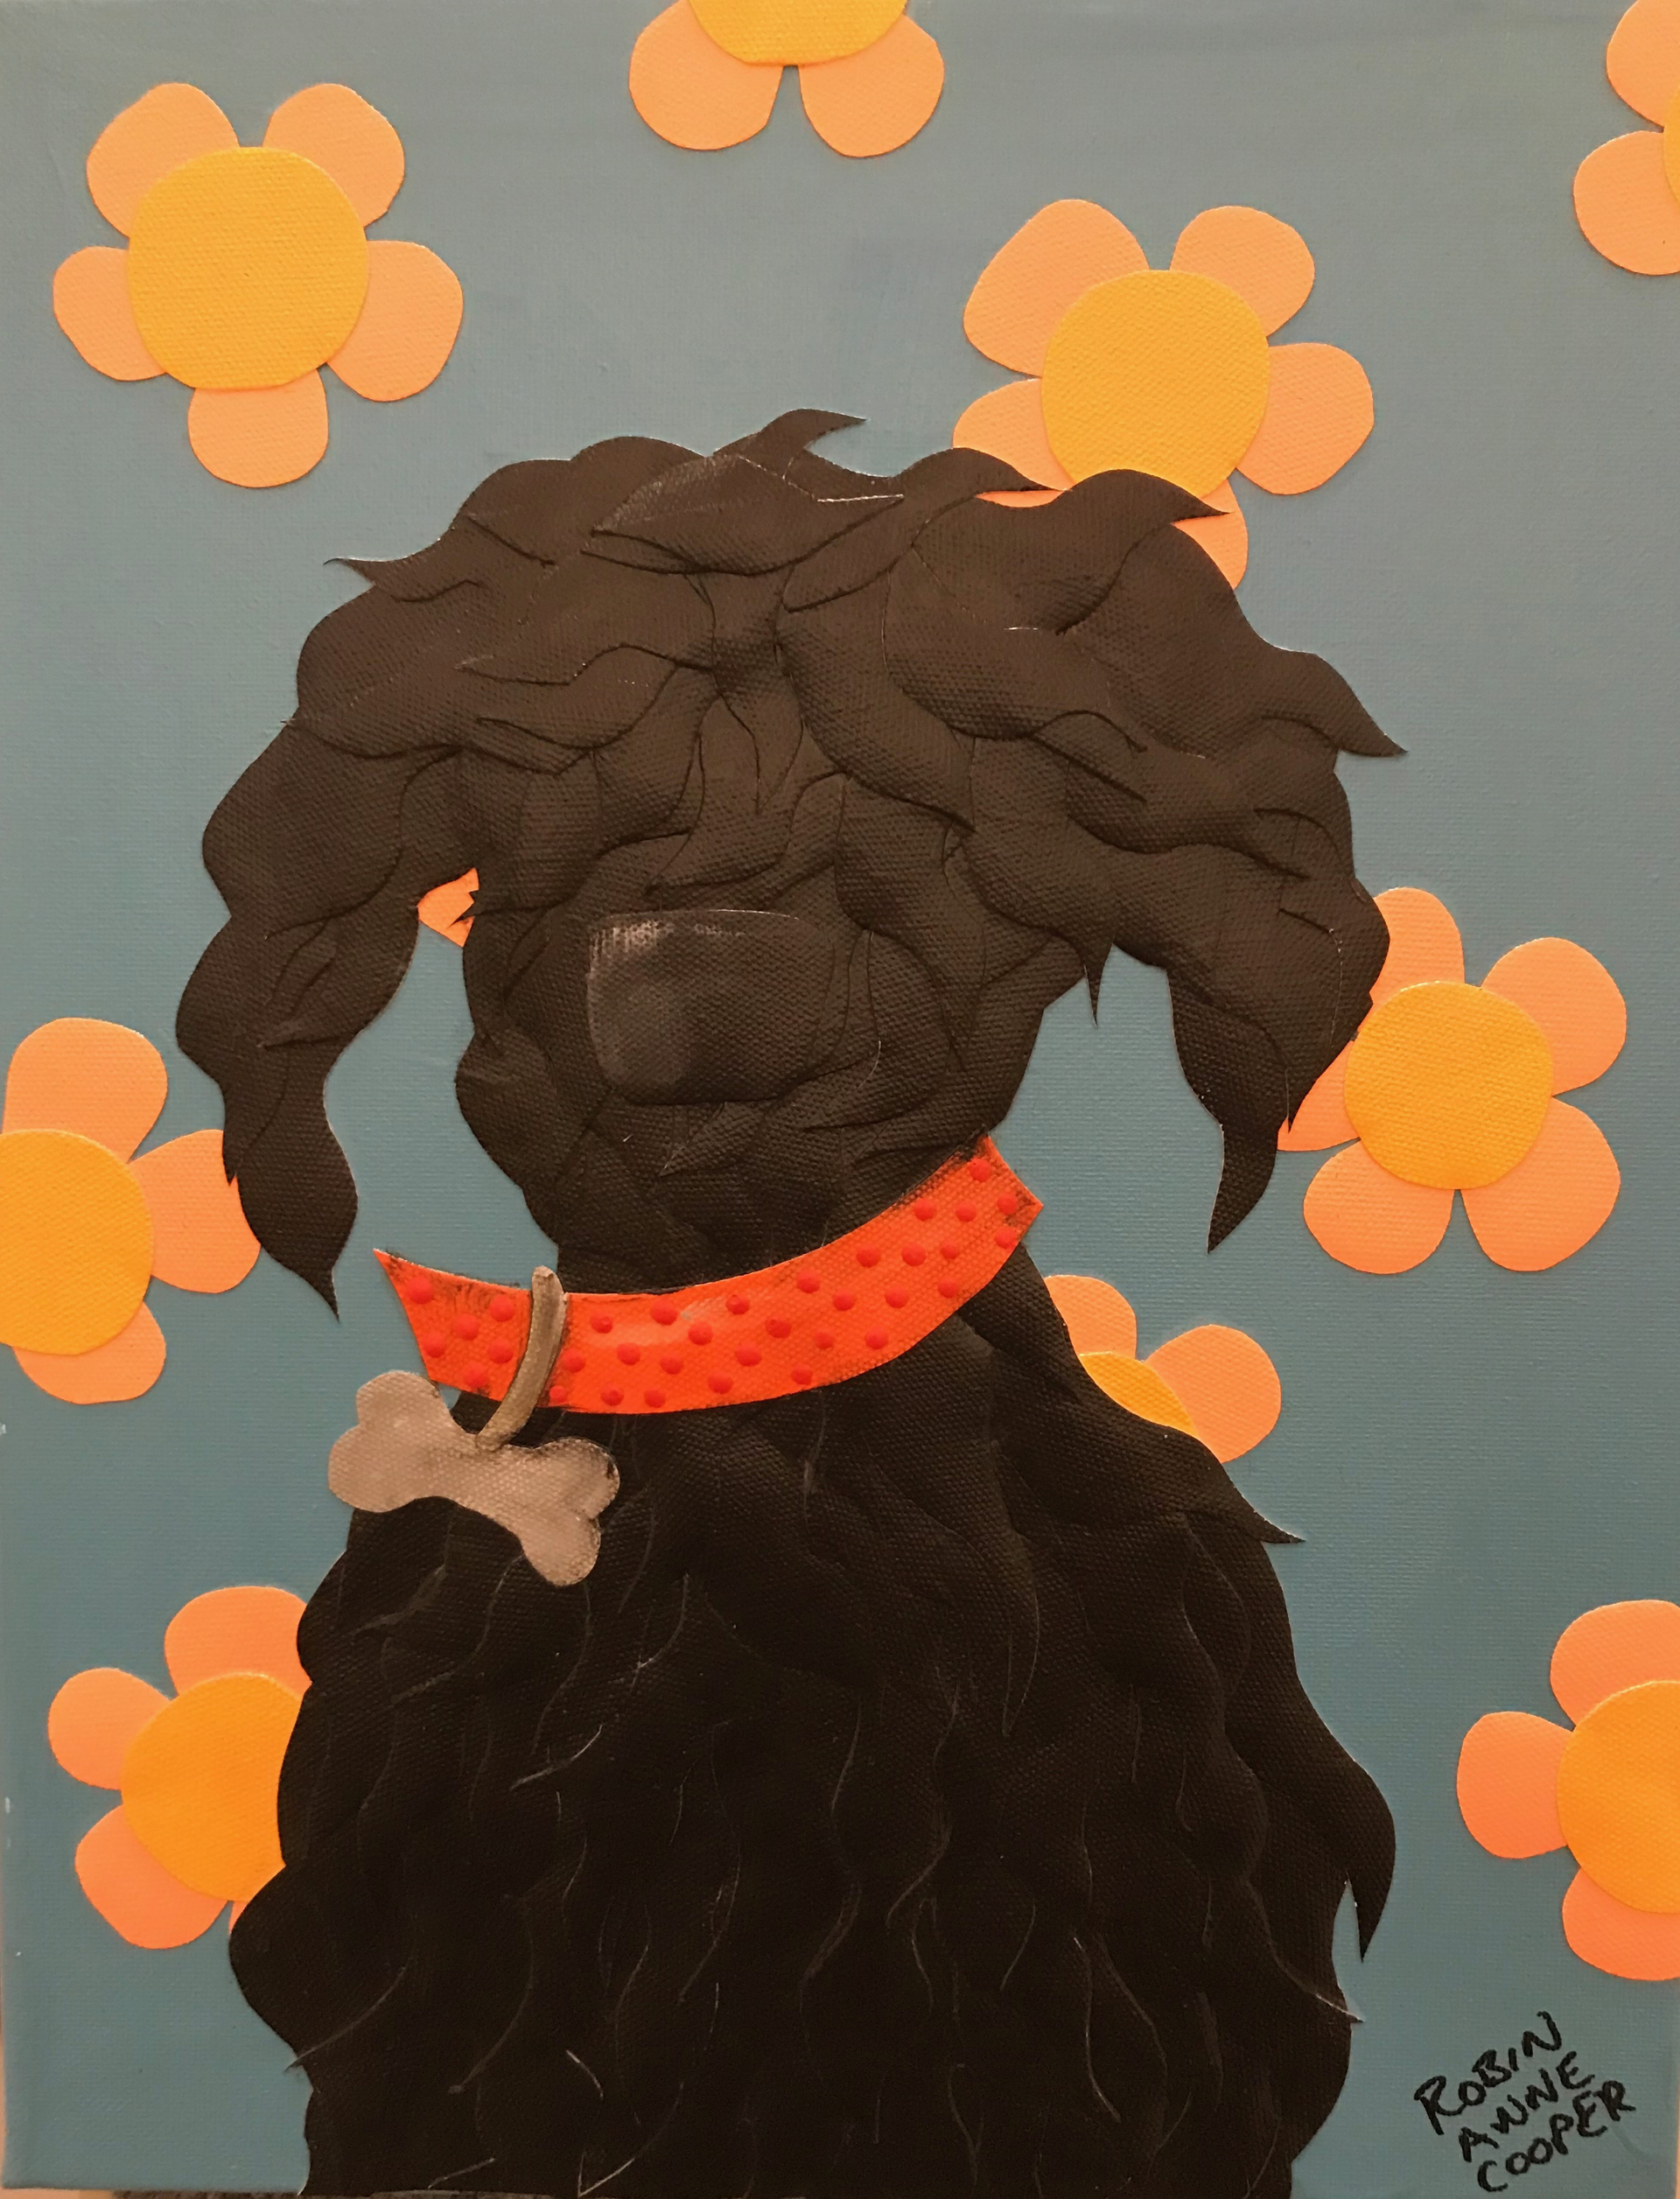 Black Shaggy Dog on Orange Flowers by Robin Cooper